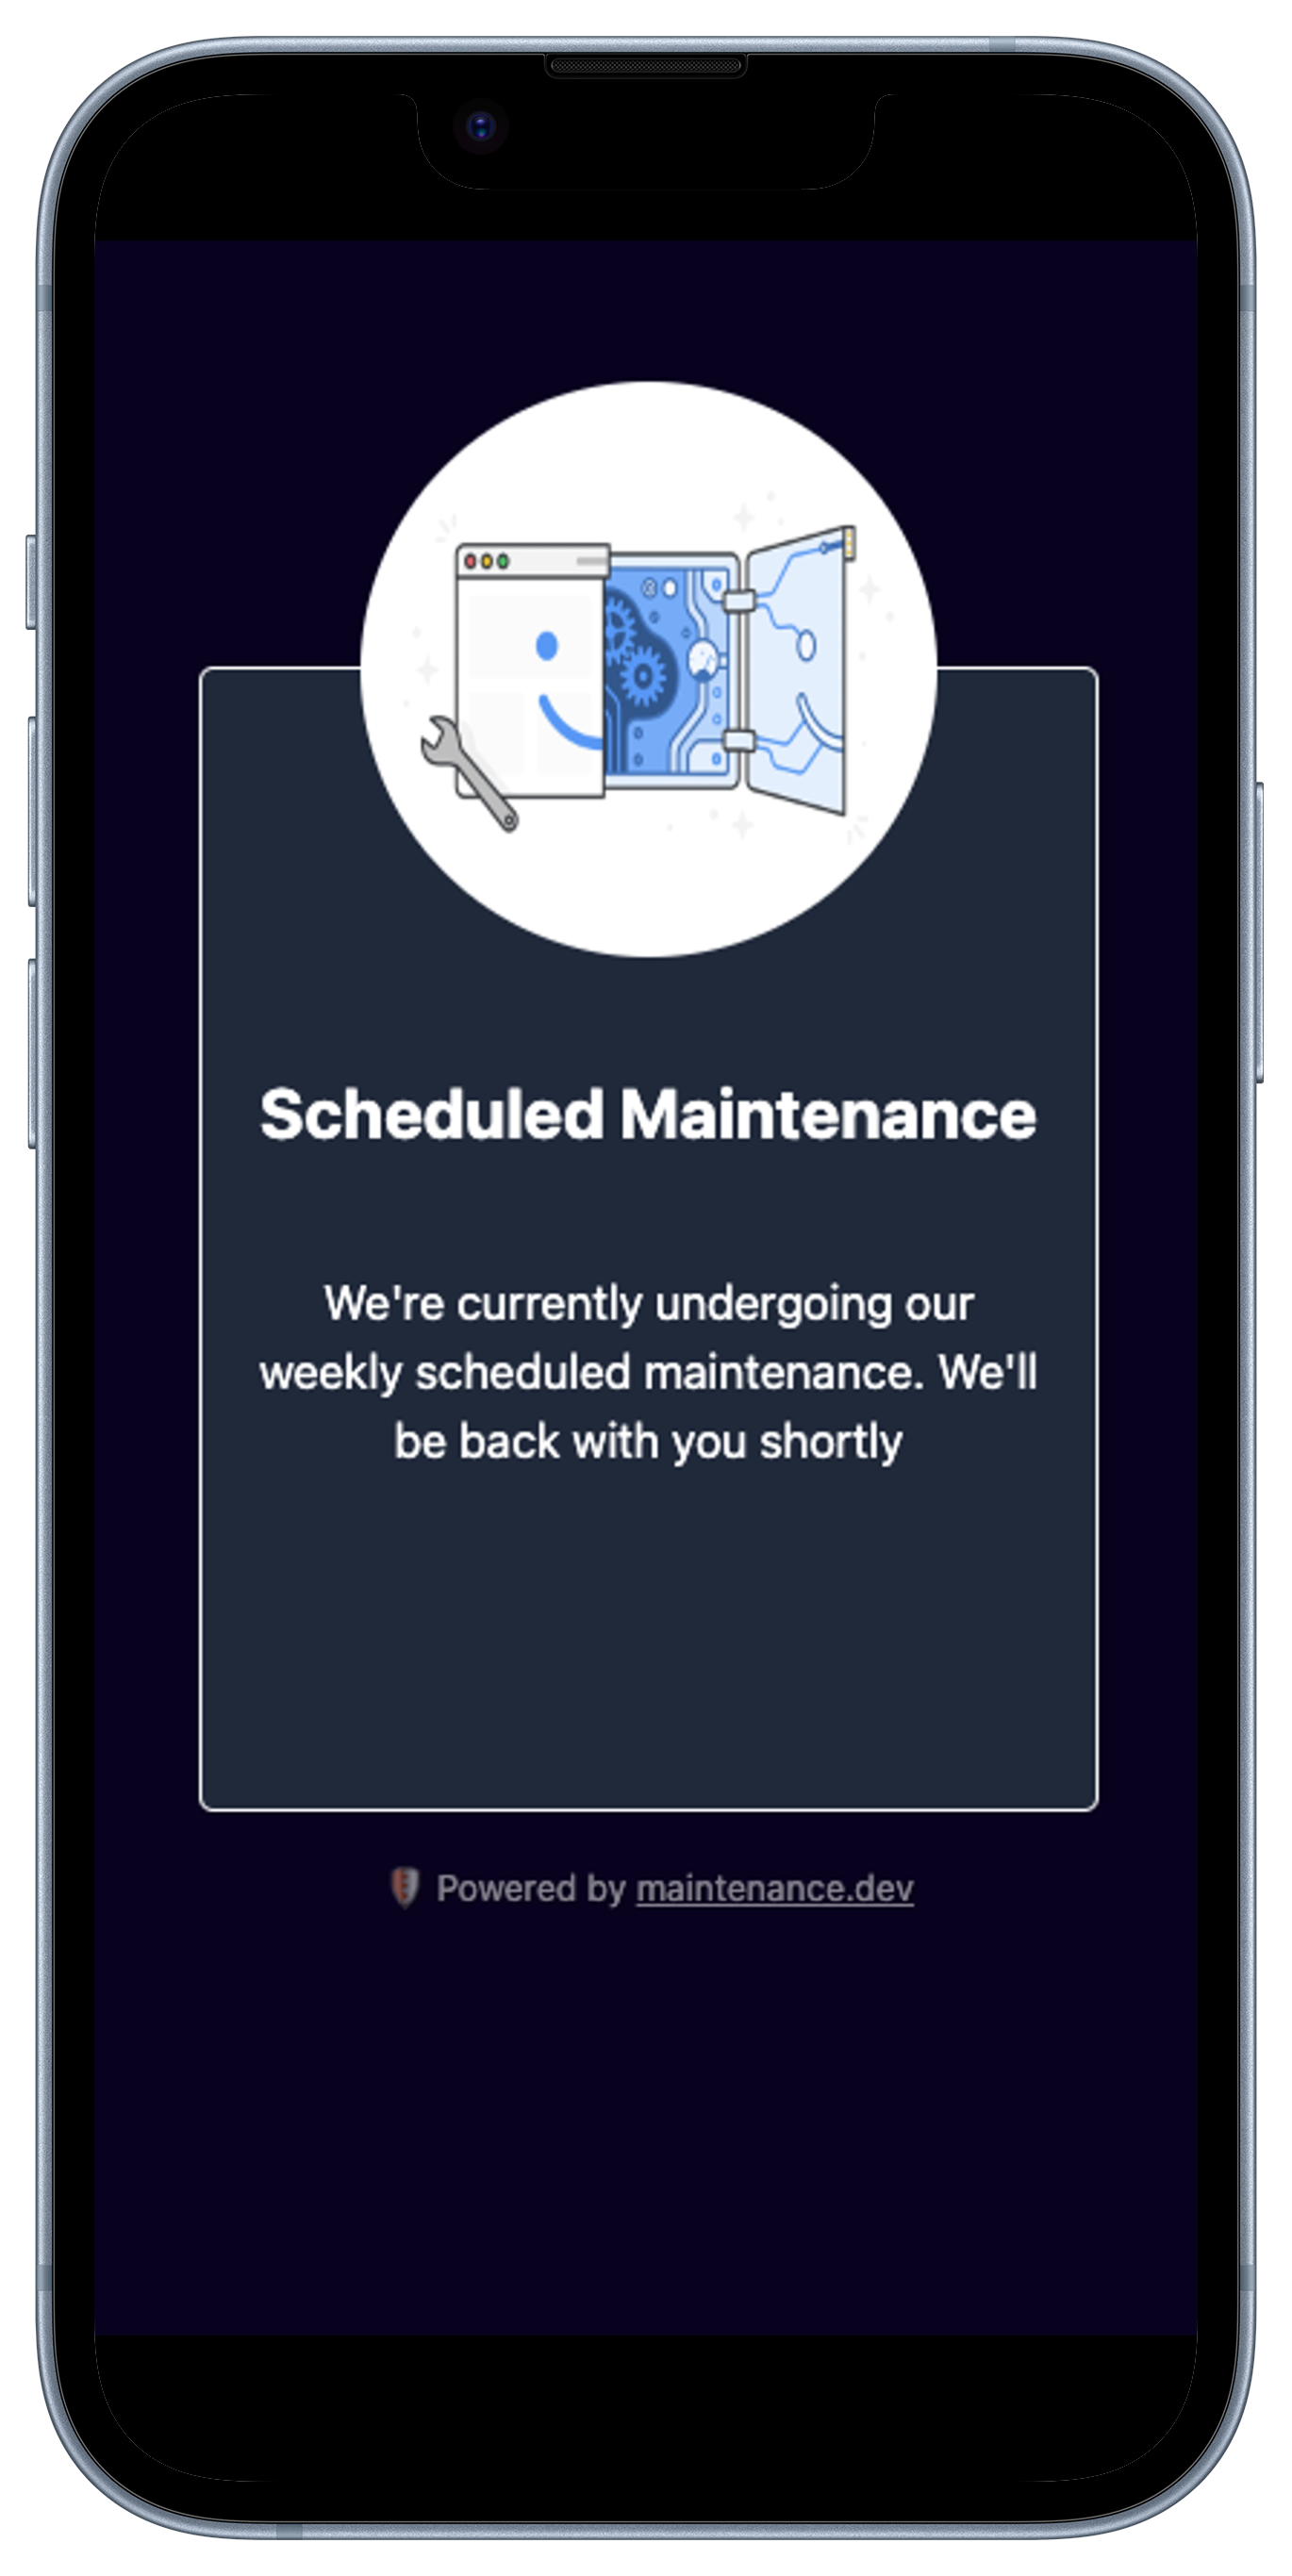 Maintenance.dev Website with maintenance mode toggled on